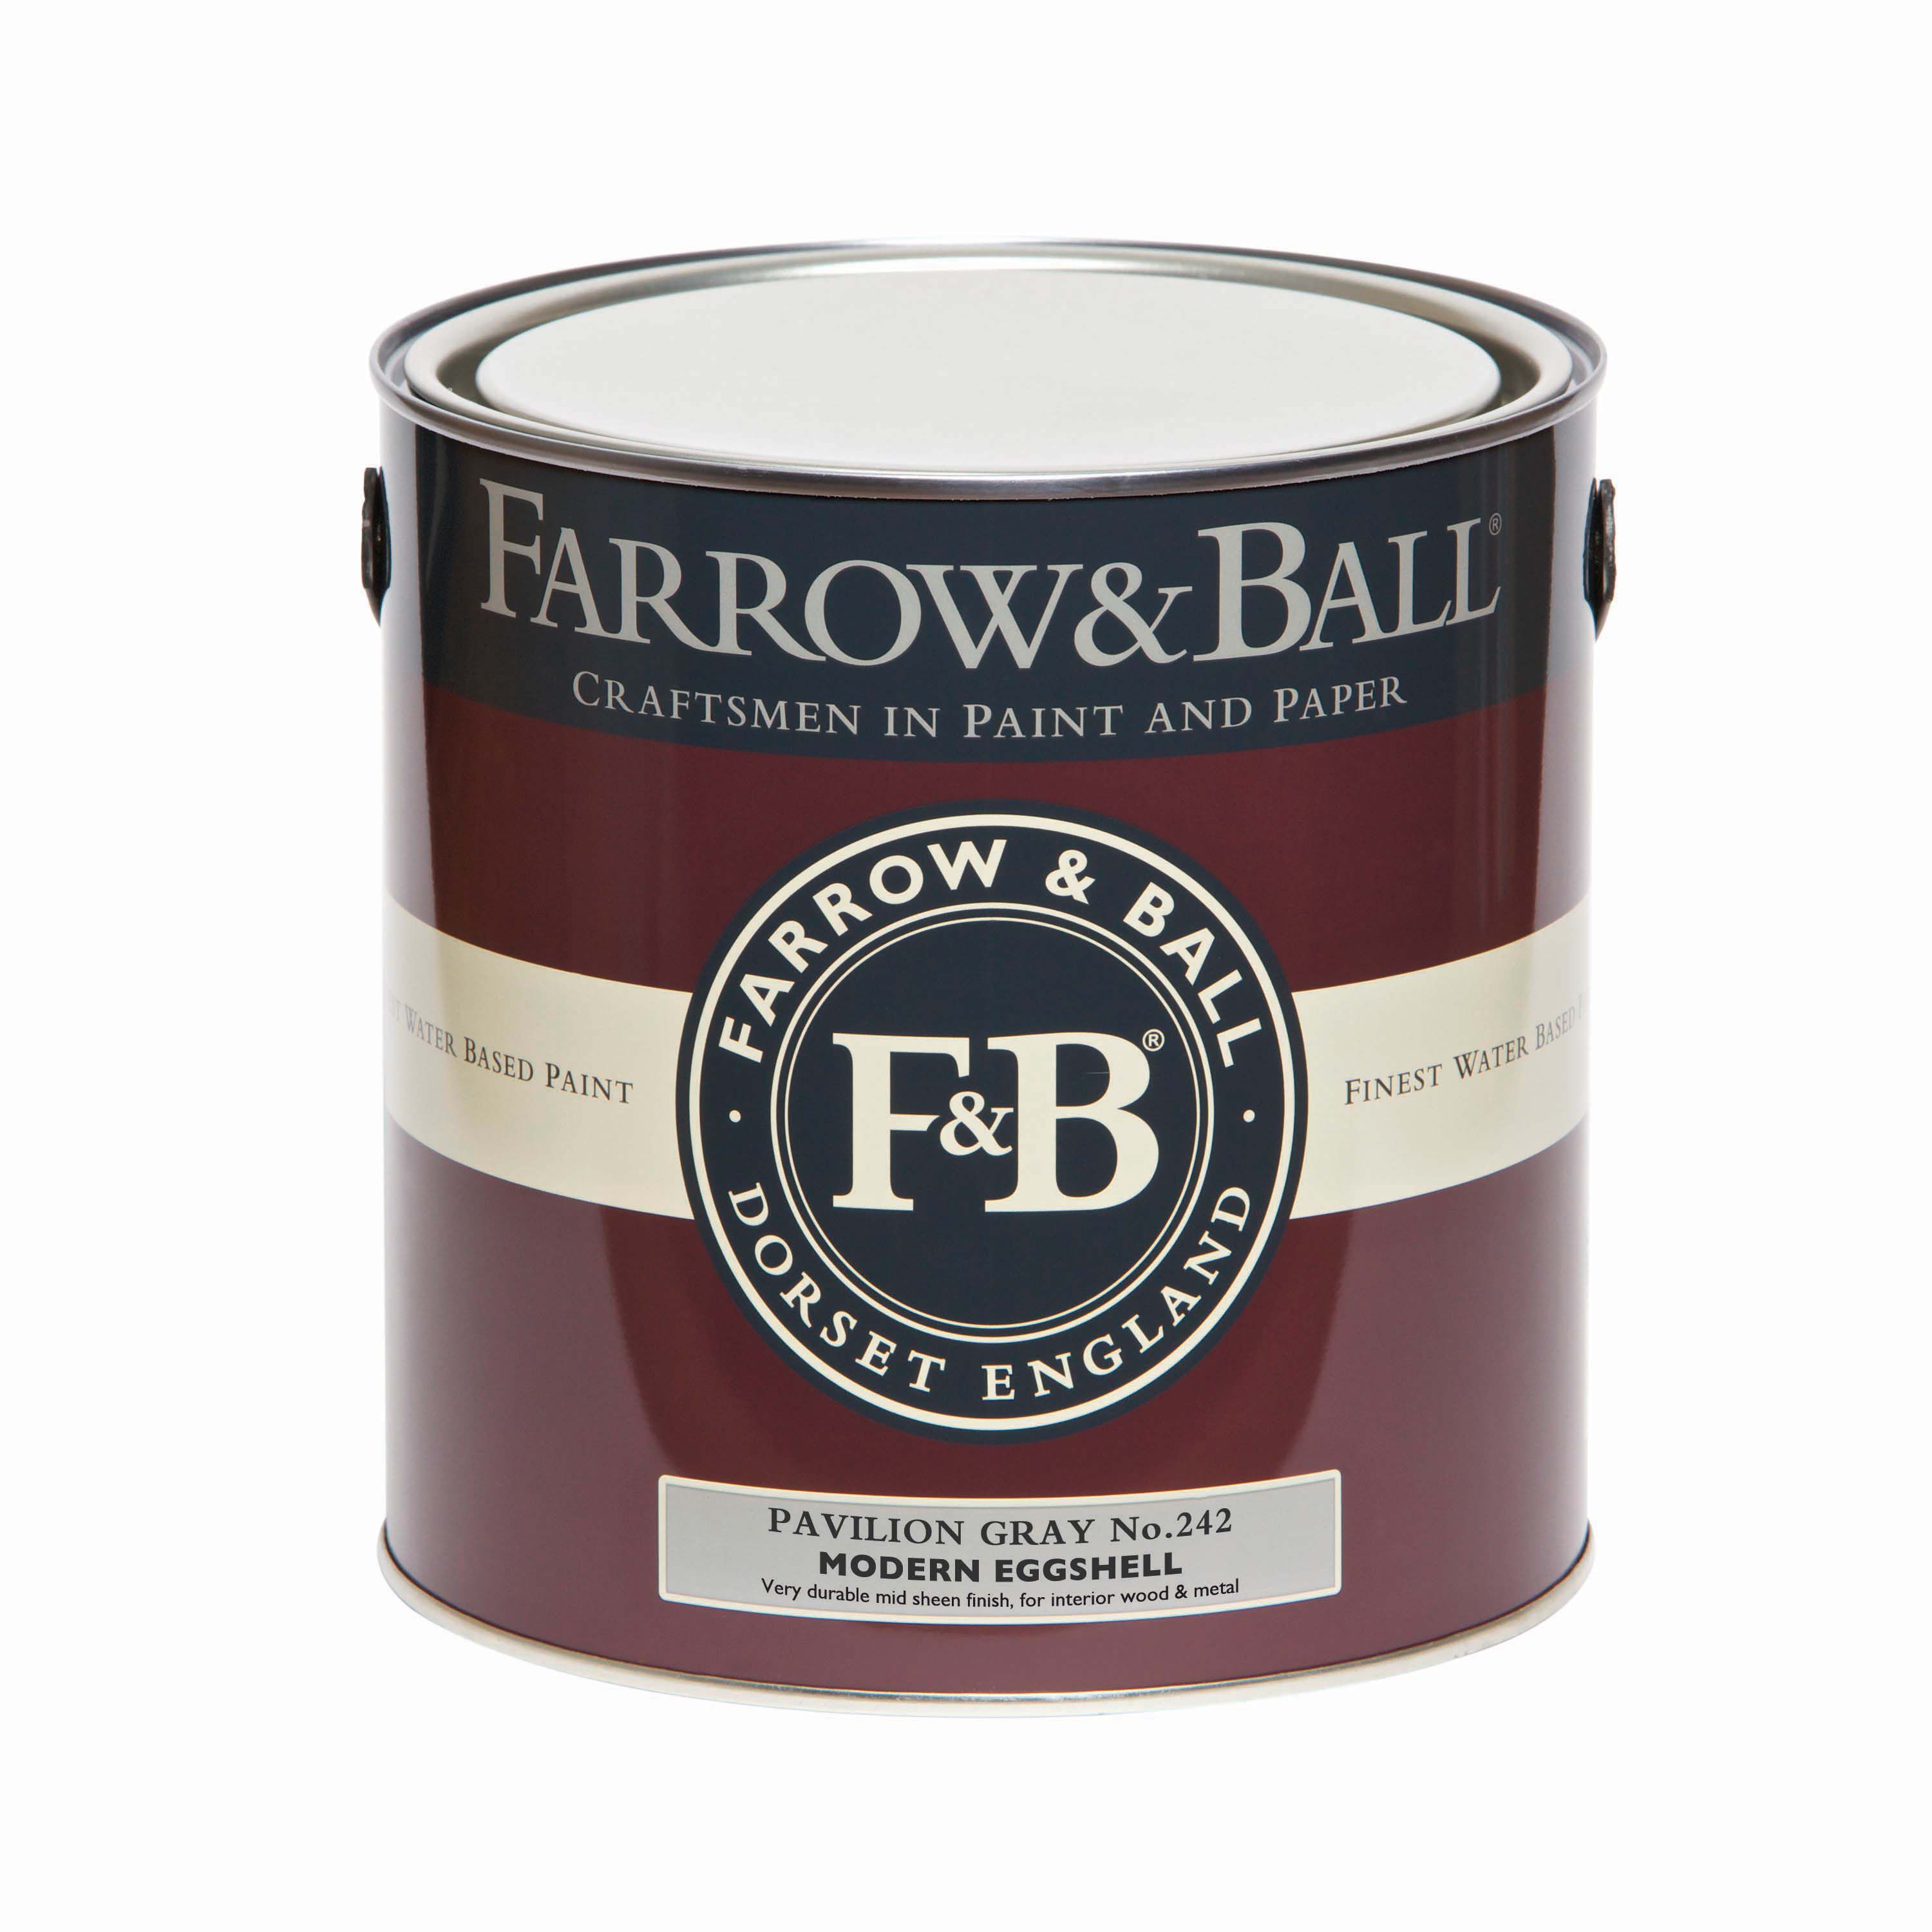 Farrow & Ball Modern Pavilion Gray No.242 Eggshell Paint, 2.5L